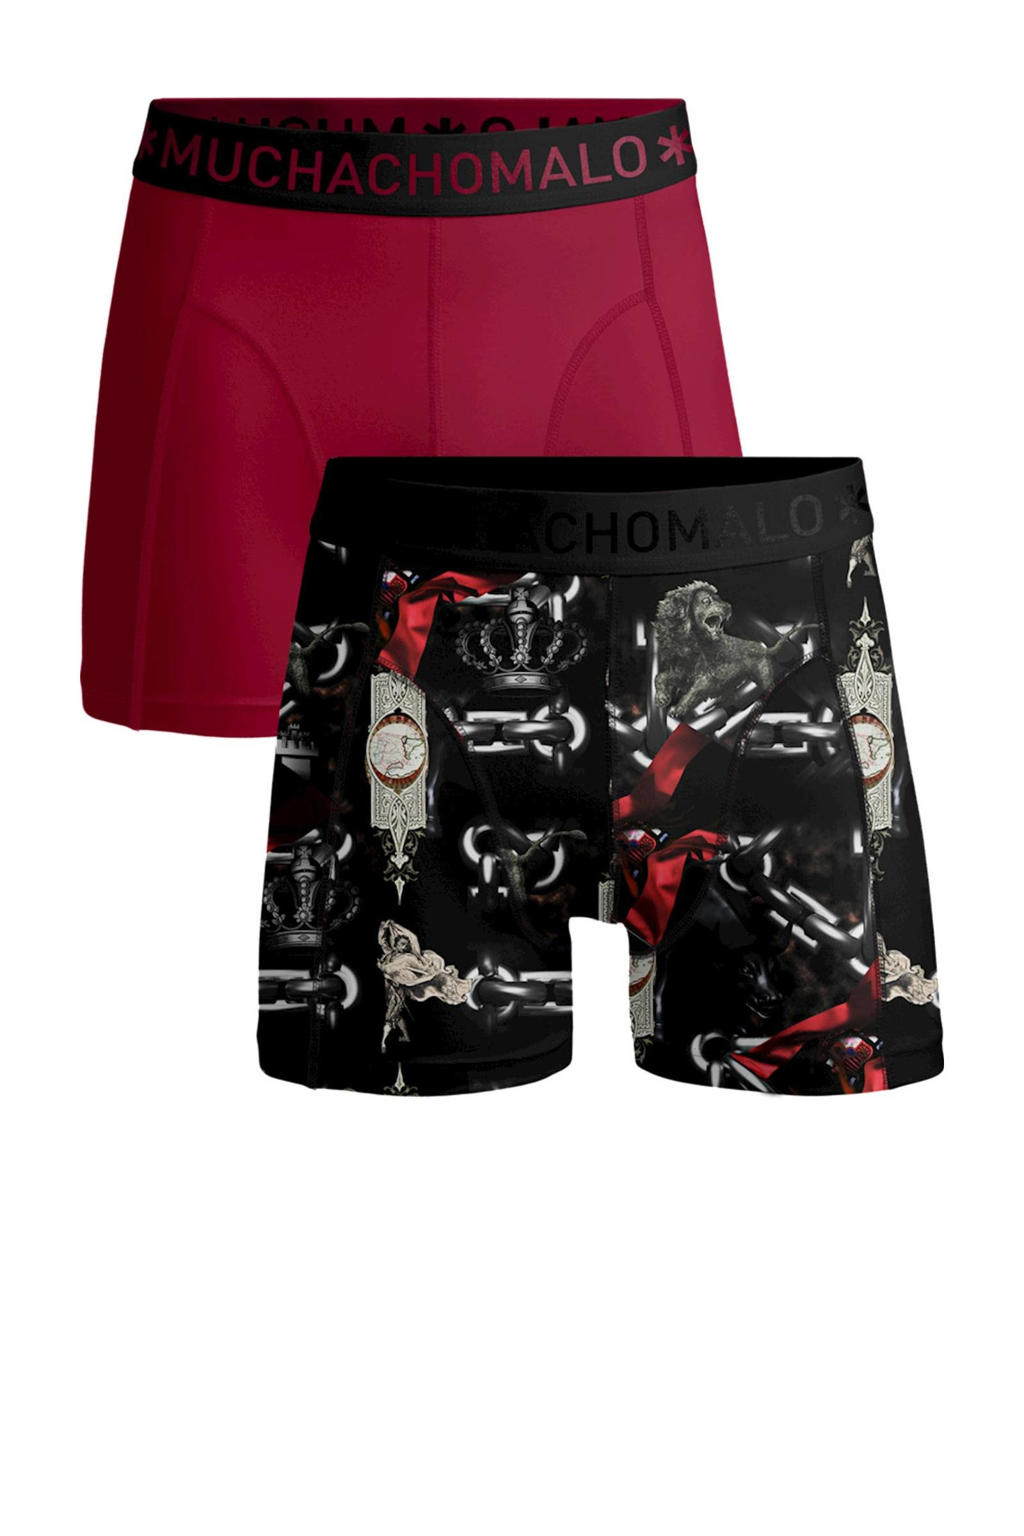 Muchachomalo   boxershort - set van 2 rood/zwart